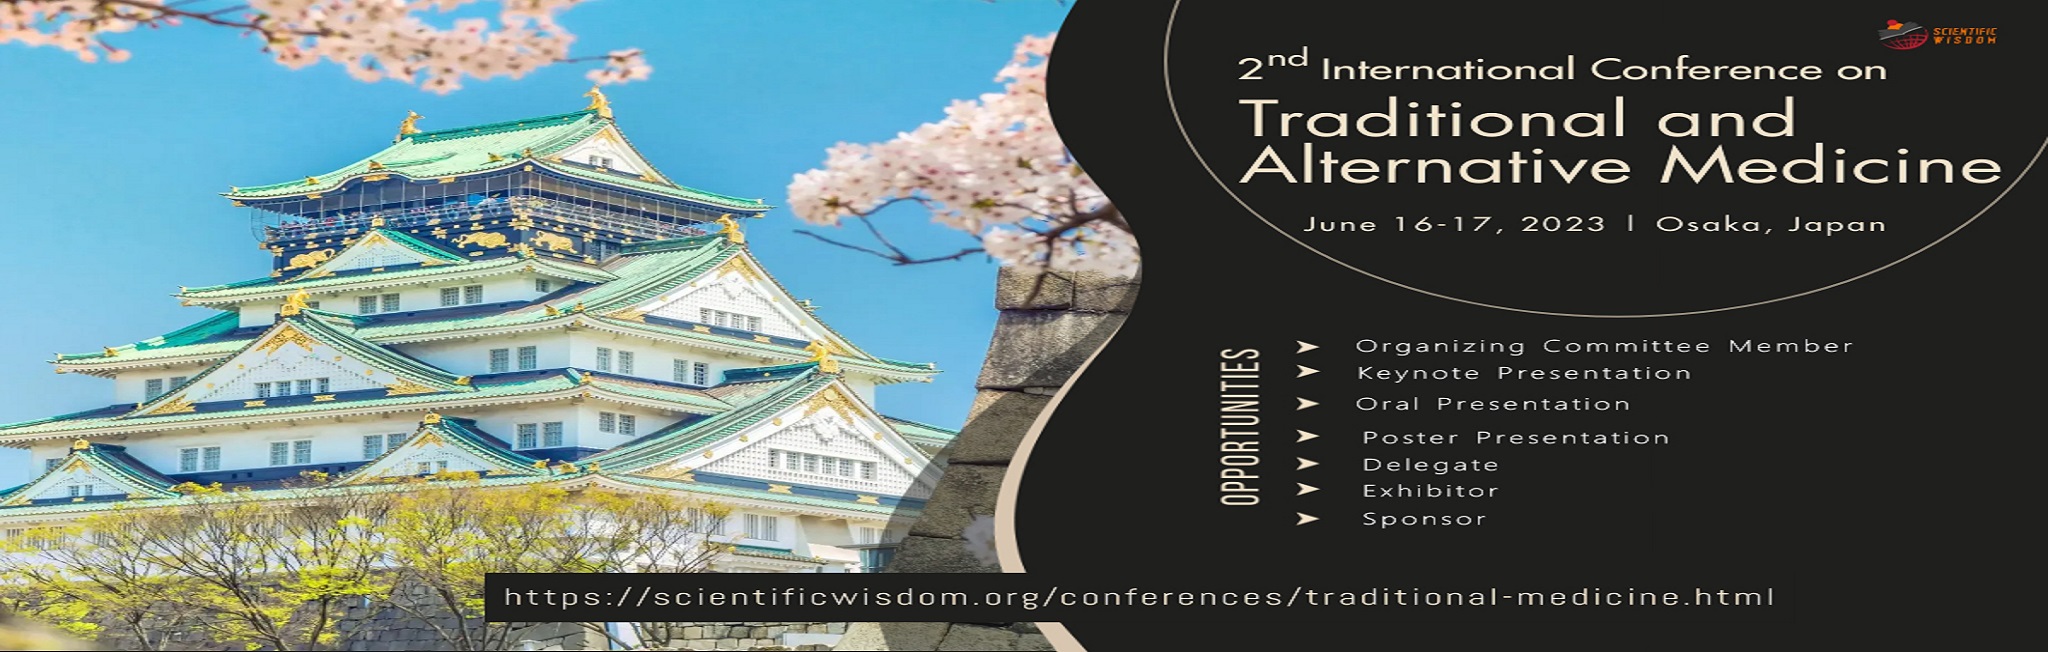 2nd International Conference on Traditional and Alternative Medicine, Osaka, Japan